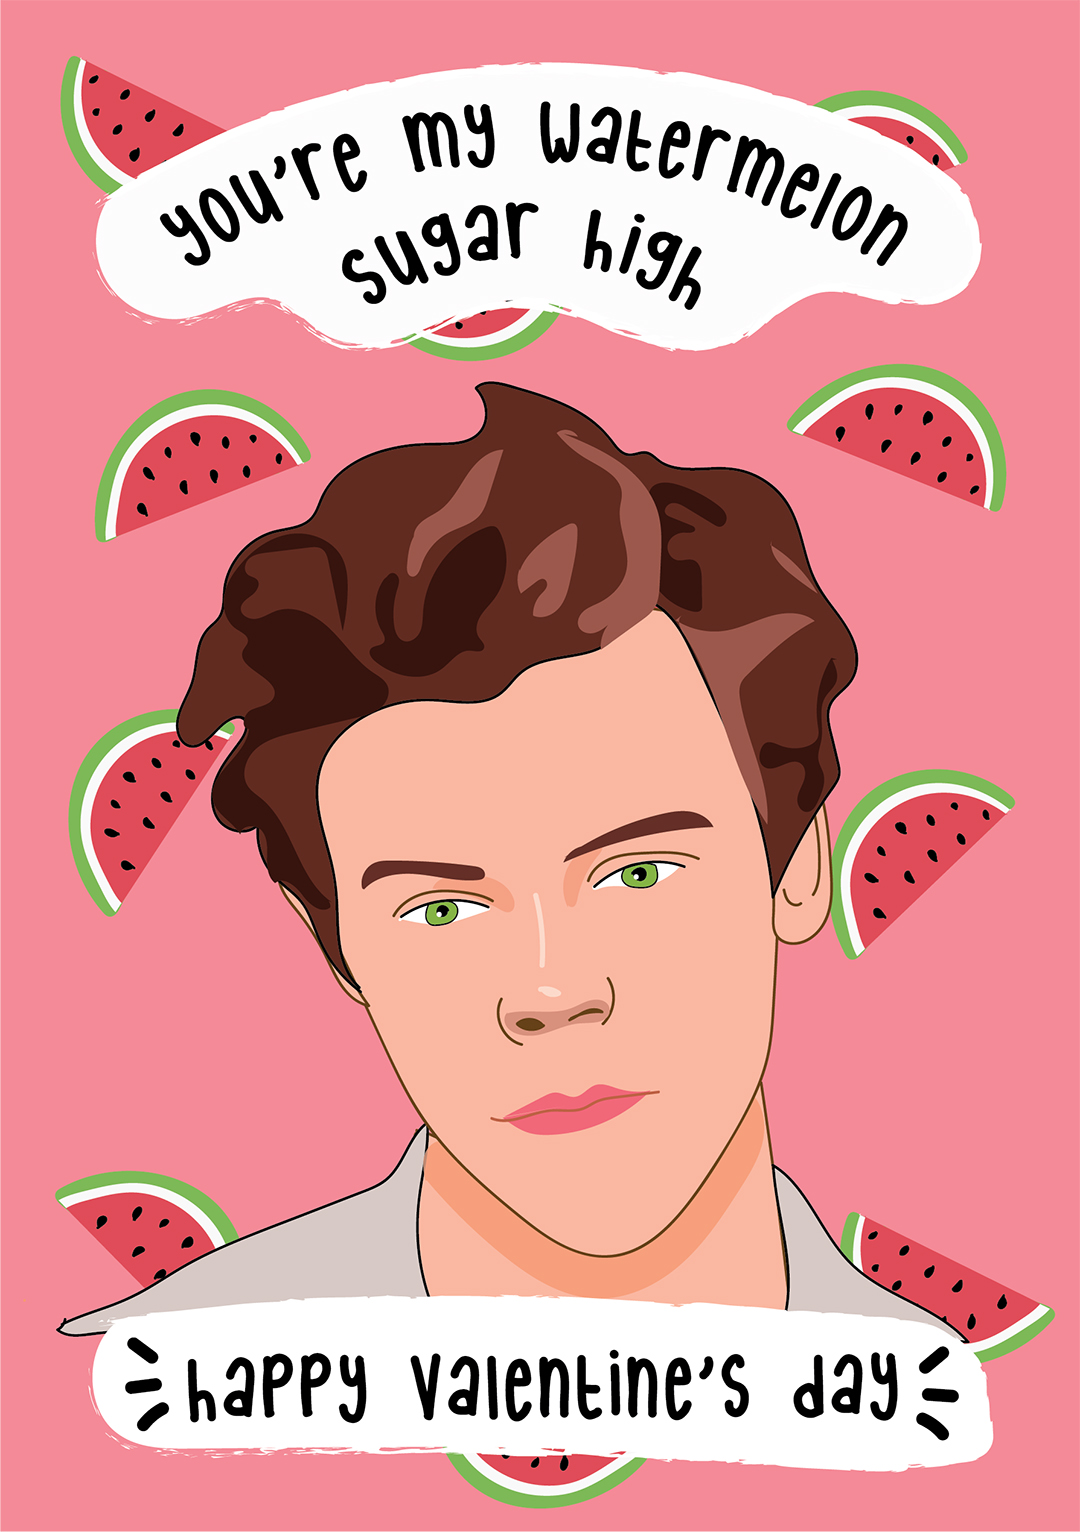 You're My Watermelon Sugar High - Valentine's Day Card